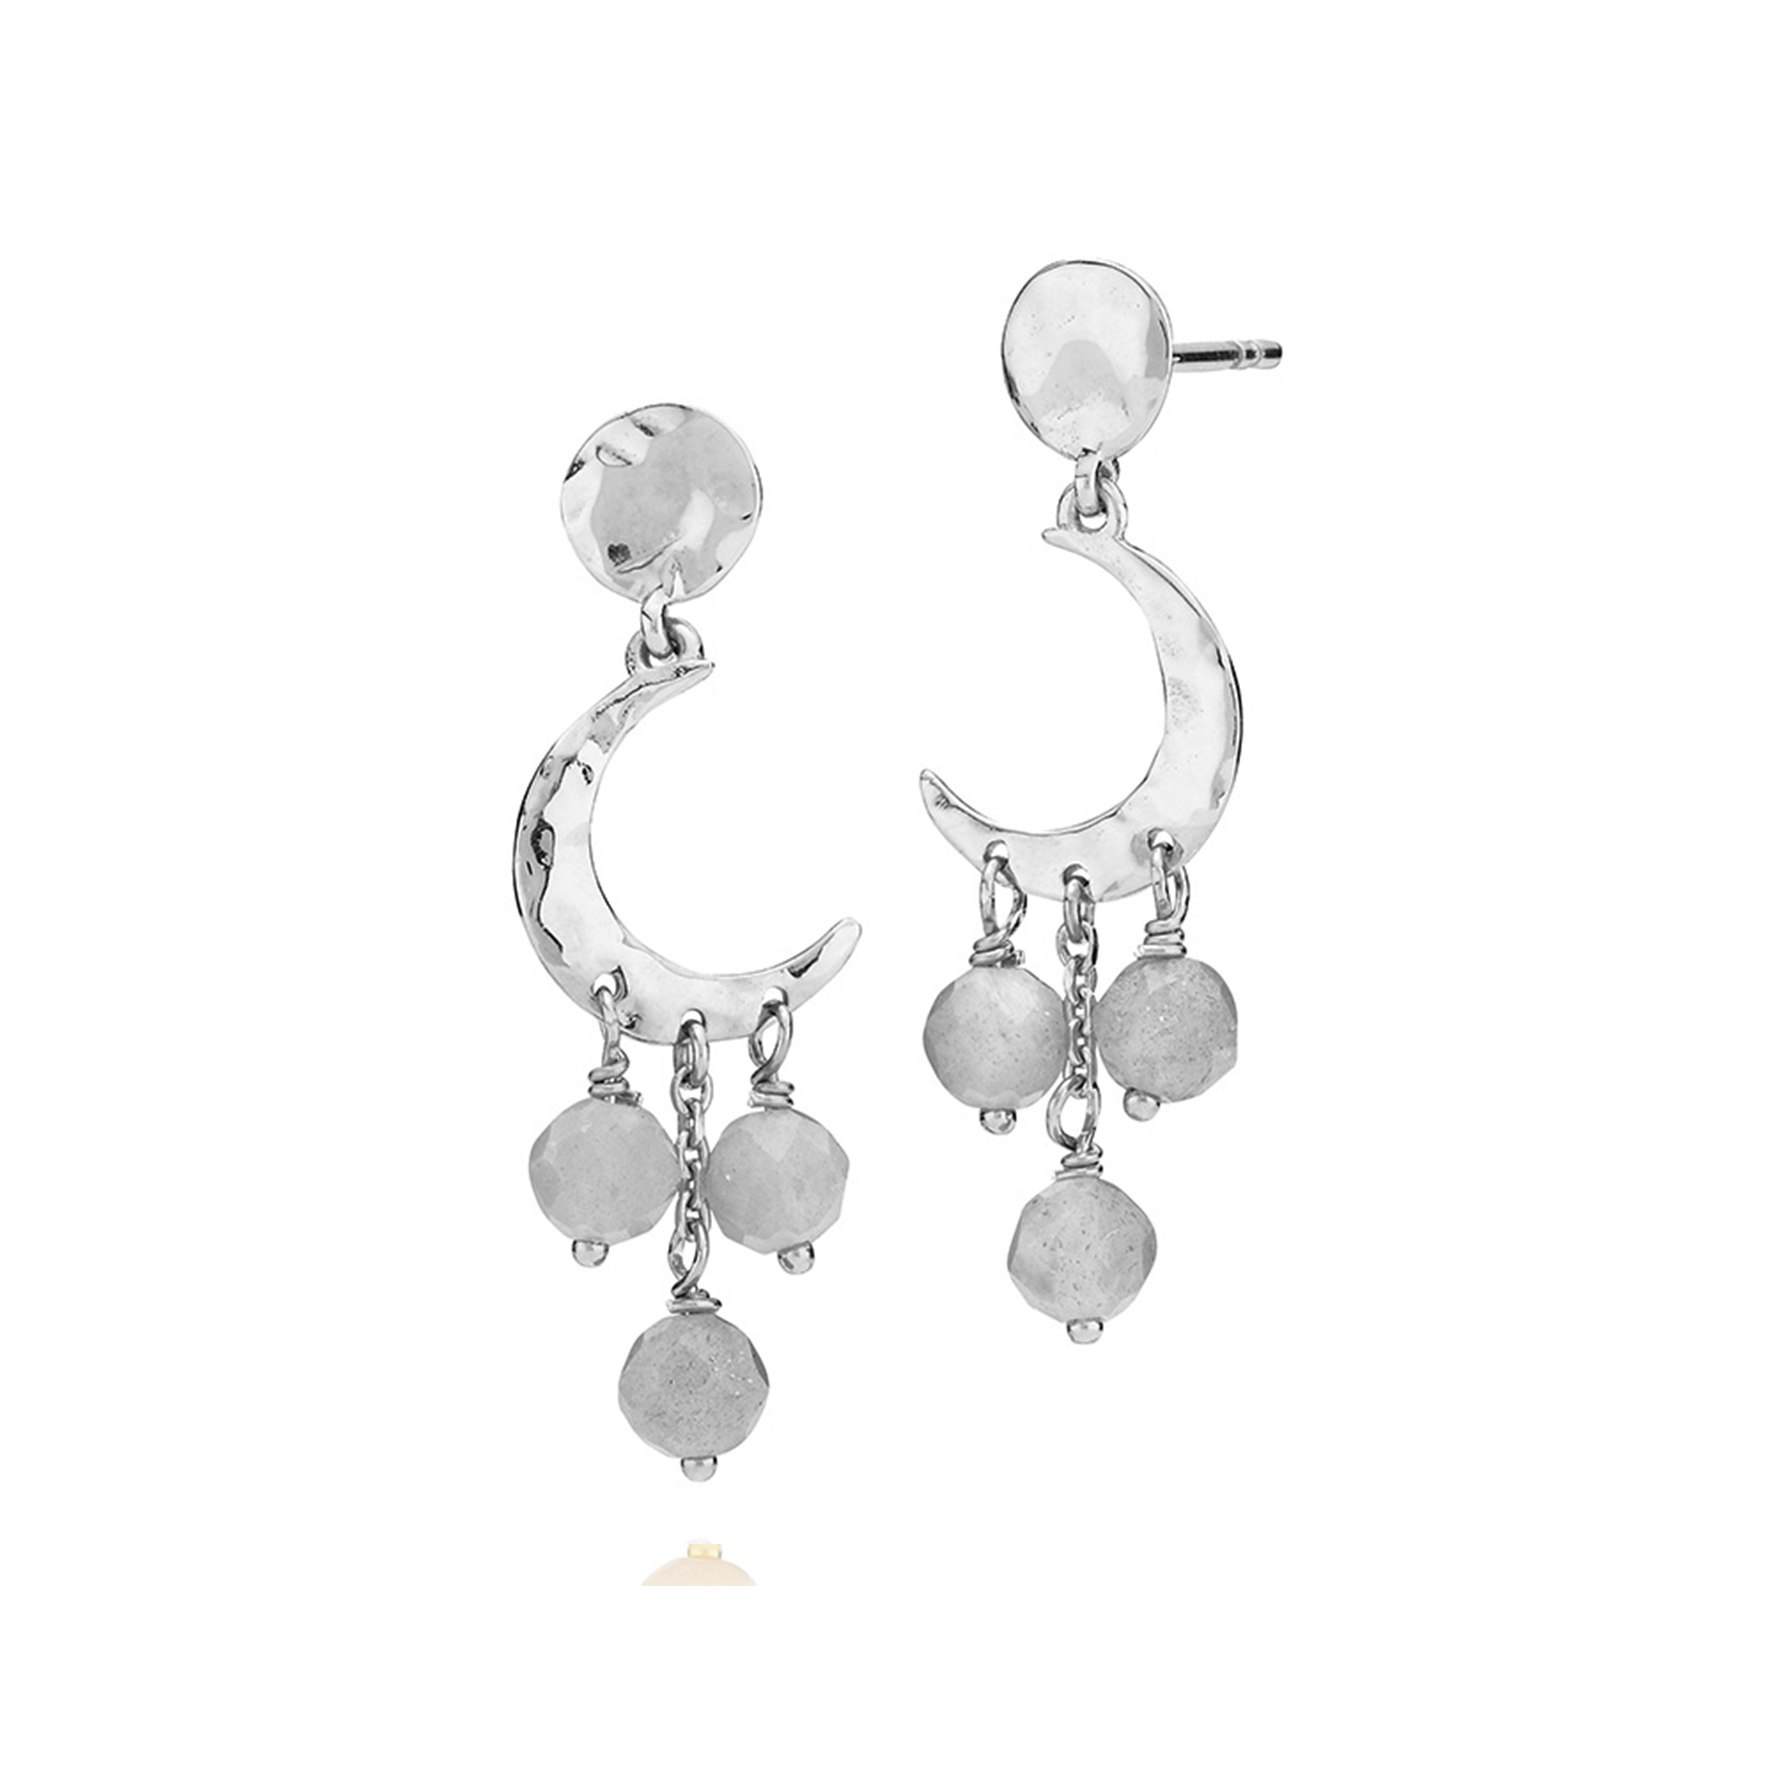 Mie Moltke Earrings With Pearls fra Izabel Camille i Sølv Sterling 925